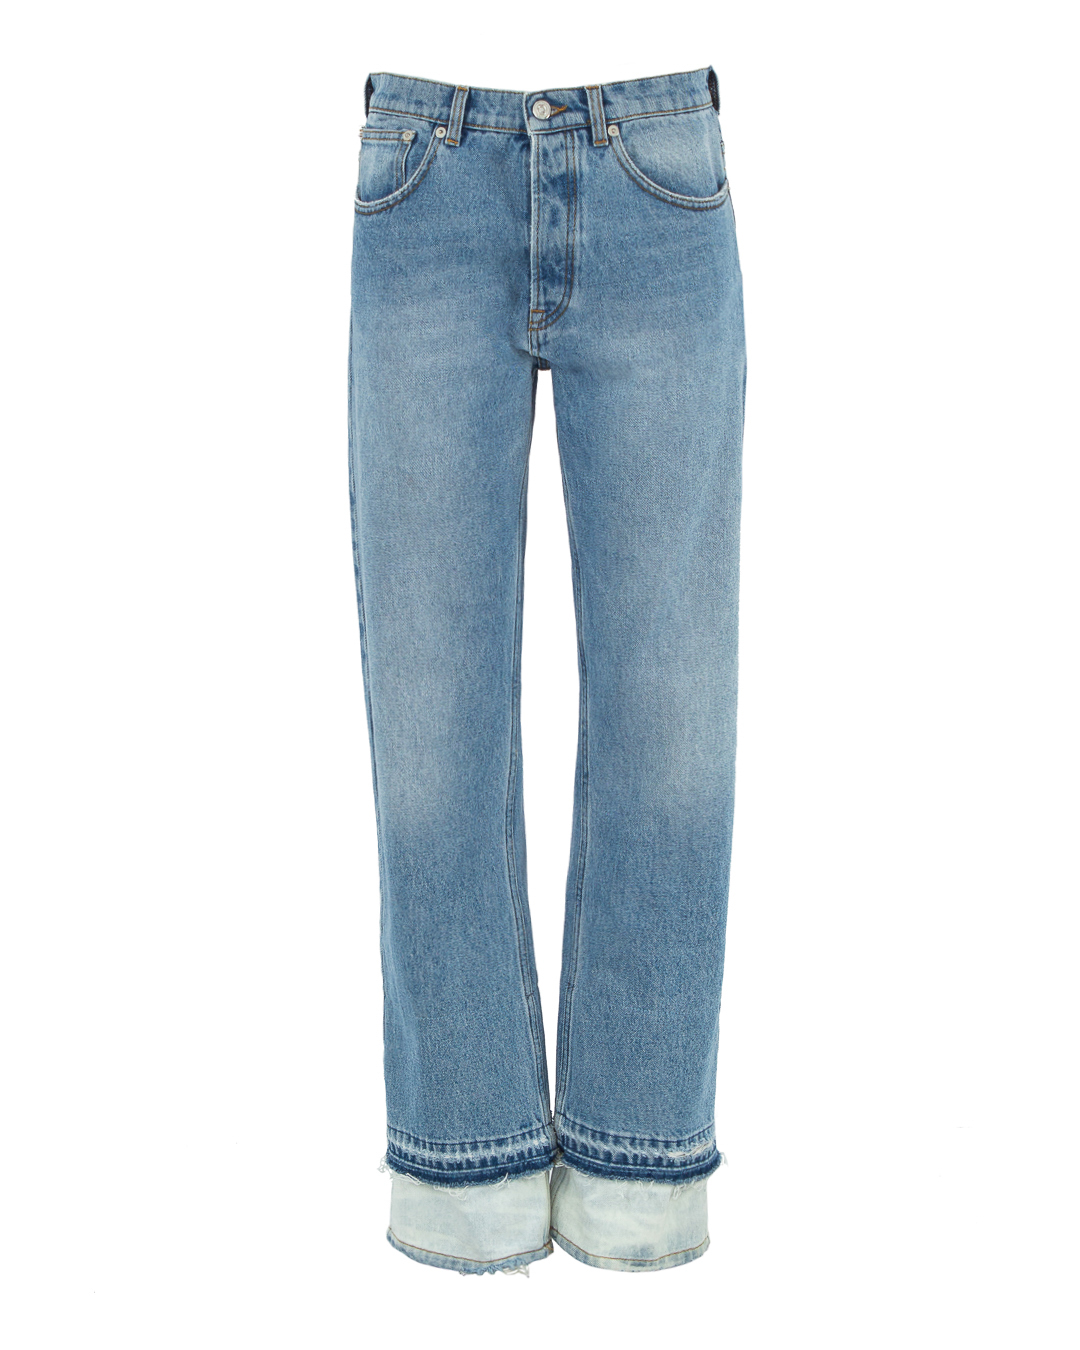 джинсы № 21 N2S2011 синий 27, размер 27 - фото 1